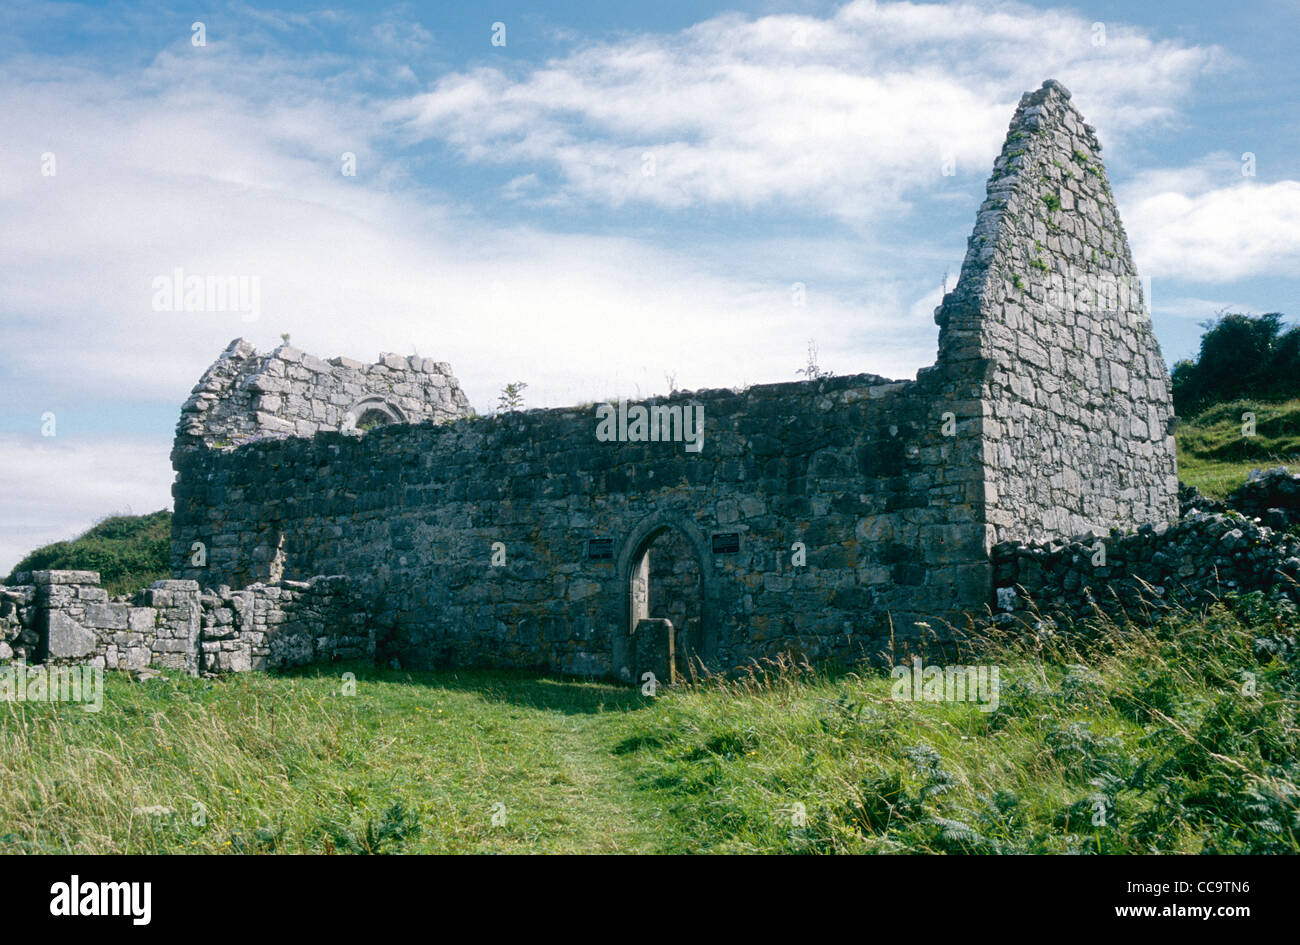 St Kieran's-An early christain ruined church on Inish Mor -Aran Islands -Co Galway Ireland Stock Photo